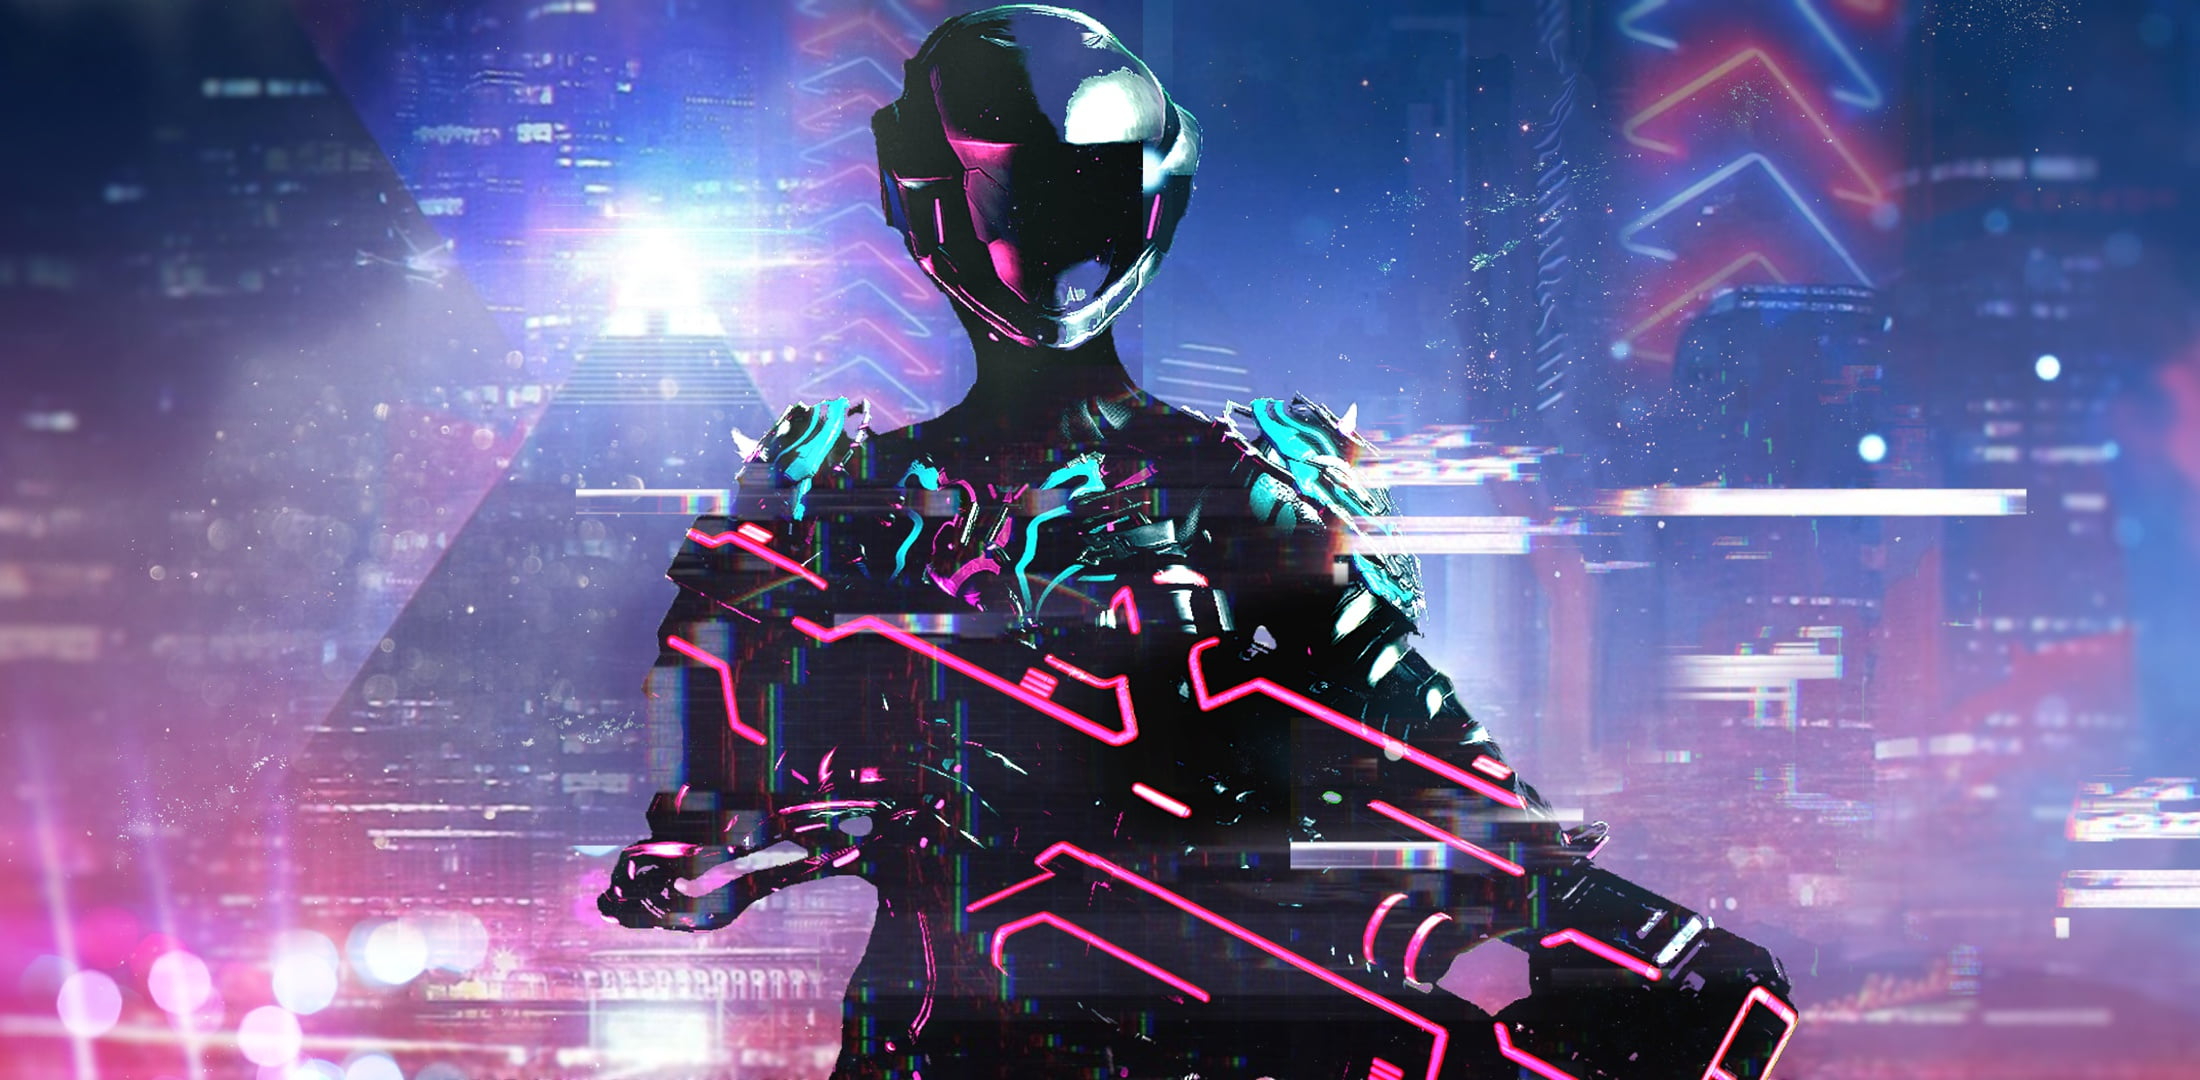 Wallpaper Neon, Cyberpunk, Weapon, Futuristic, Warframe Wallpaper, Game